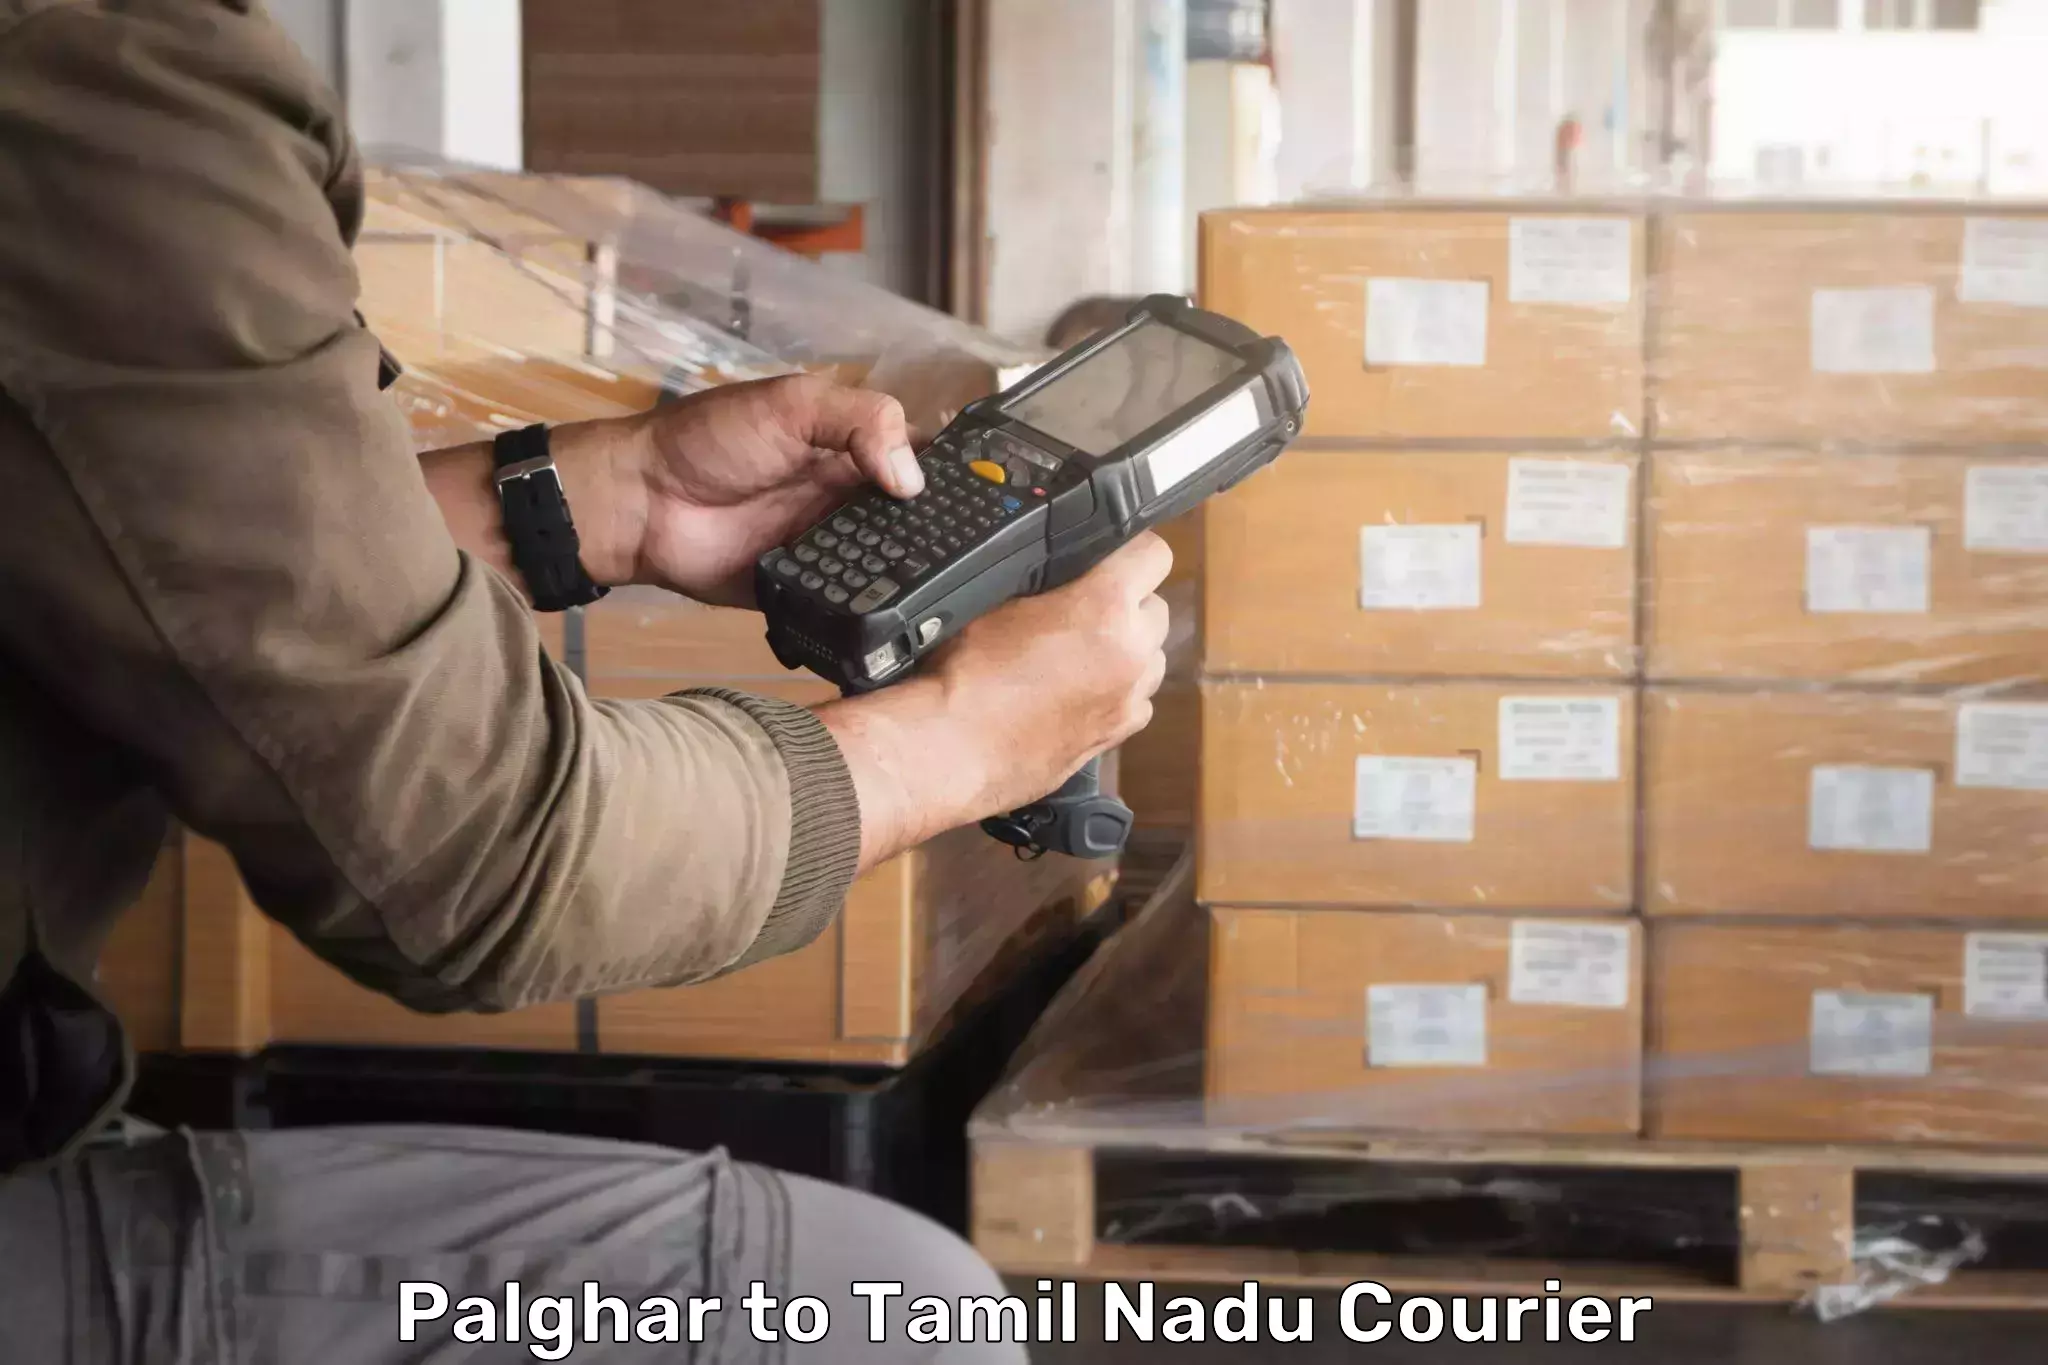 Global courier networks Palghar to Kodumudi